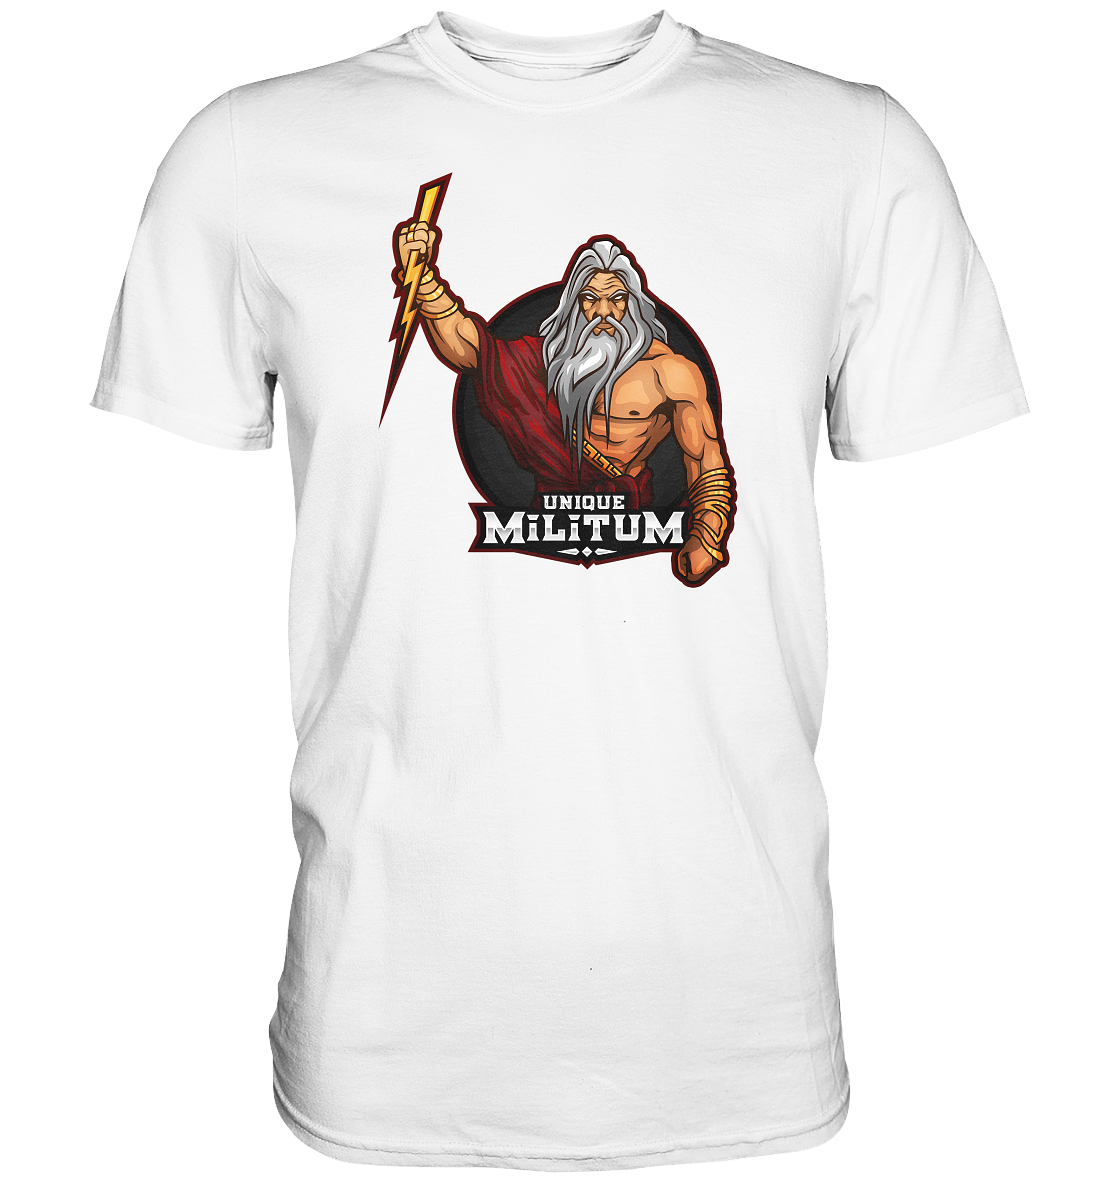 UNIQUE MILITUM - Basic Shirt